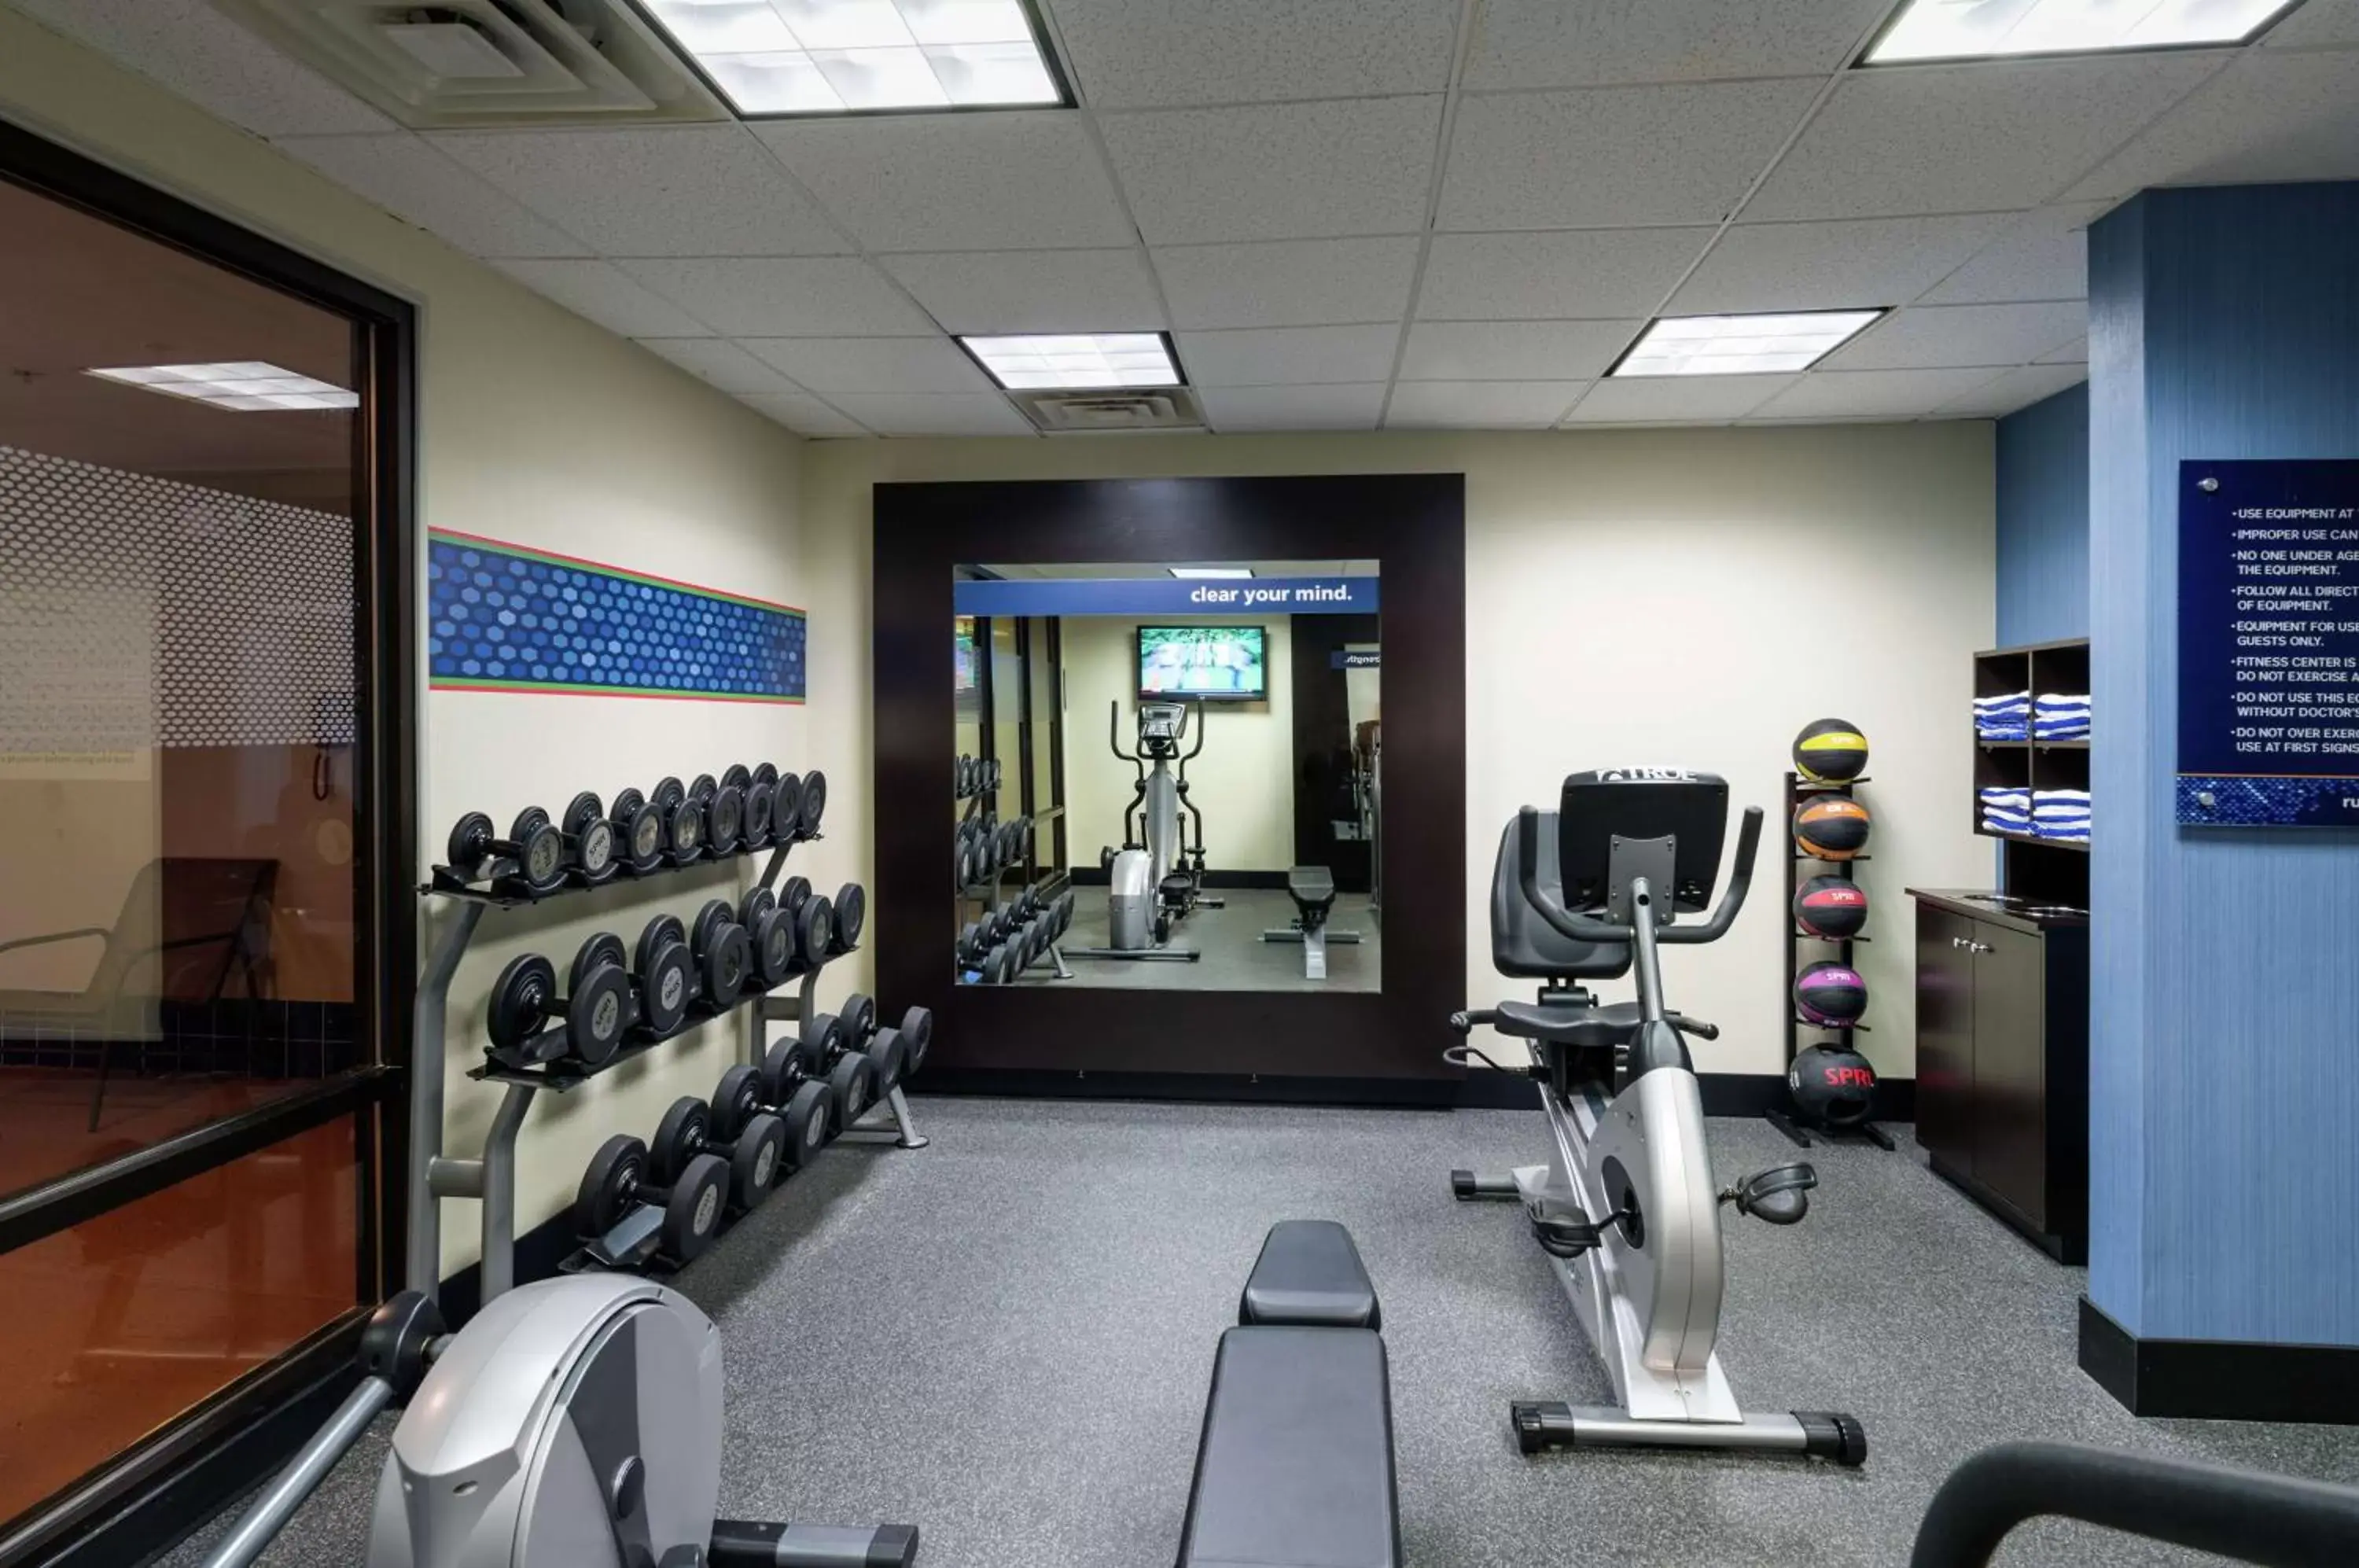 Fitness centre/facilities, Fitness Center/Facilities in Hampton Inn Selinsgrove/Shamokin Dam